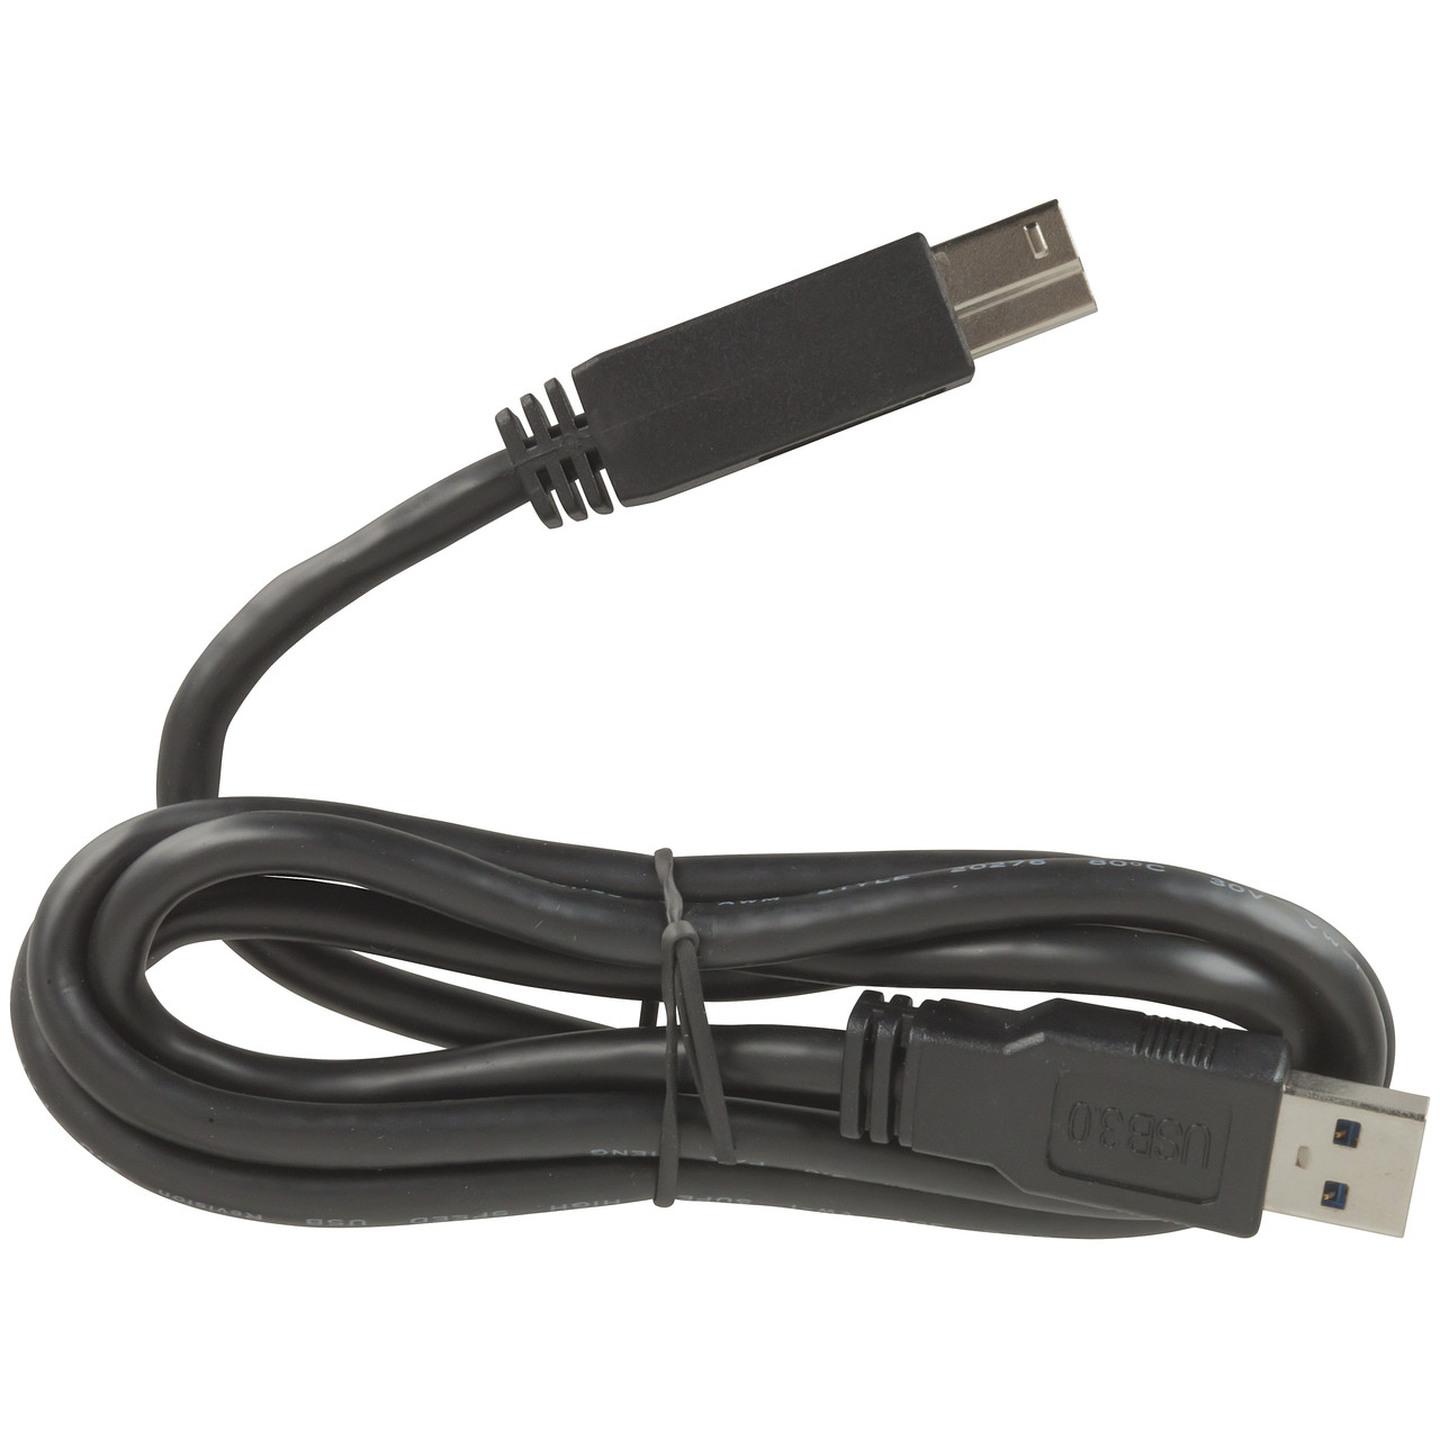 USB 3.0 External SATA HDD Docking Station 